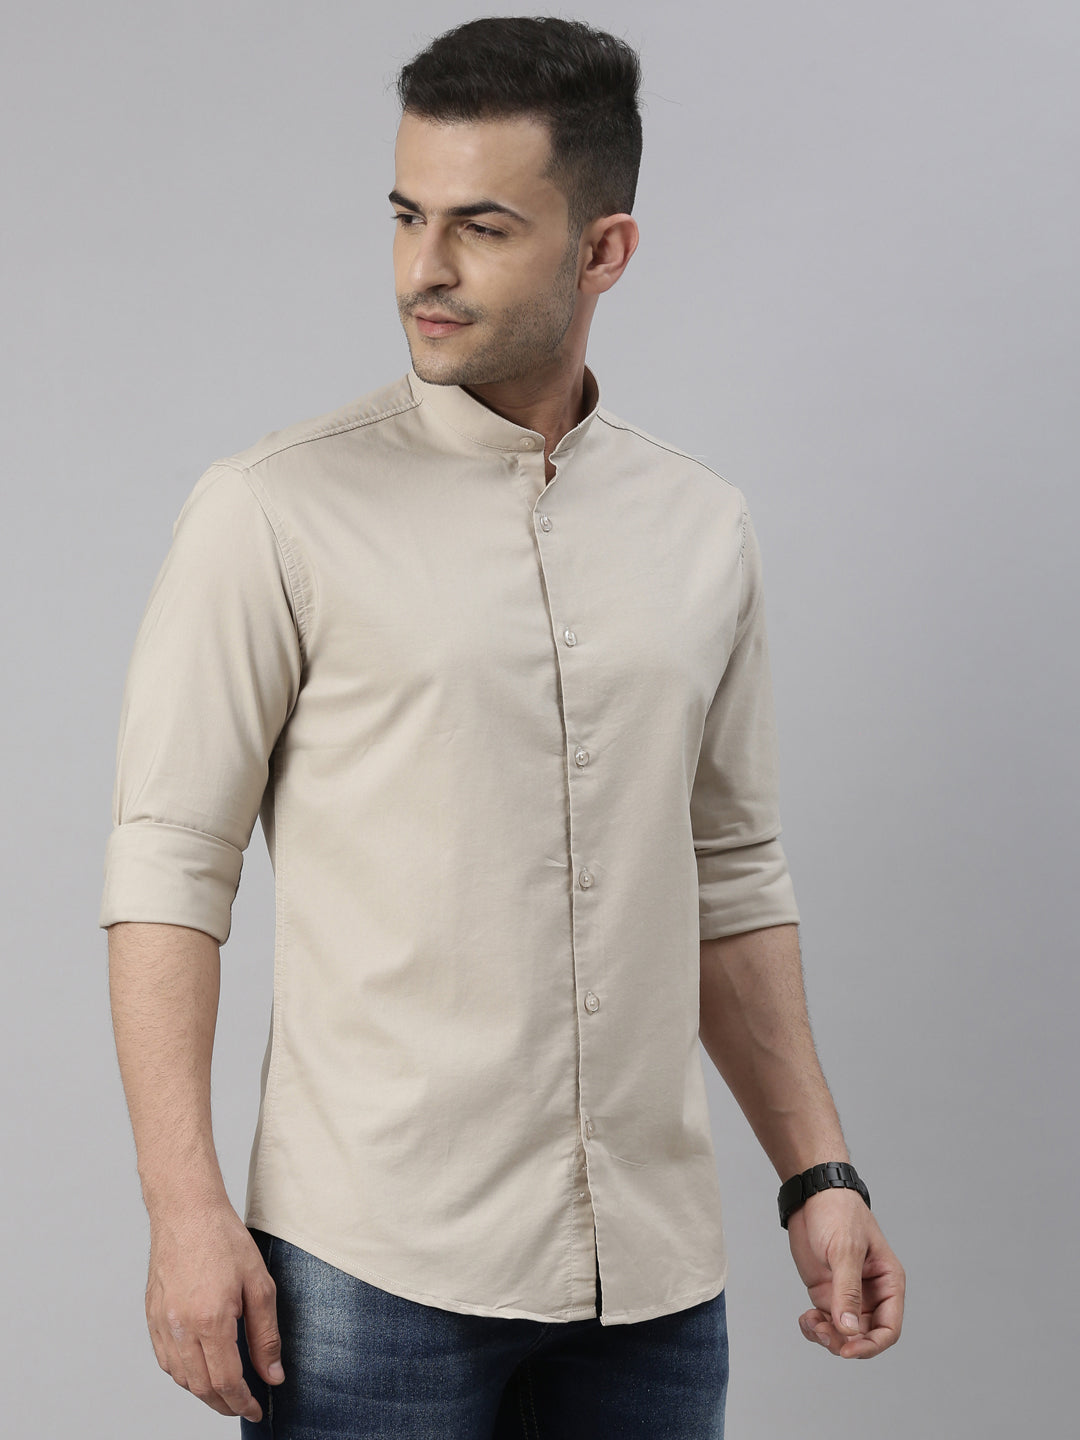 Beige Chinese Collar Casual Shirt Solid Shirt Bushirt   